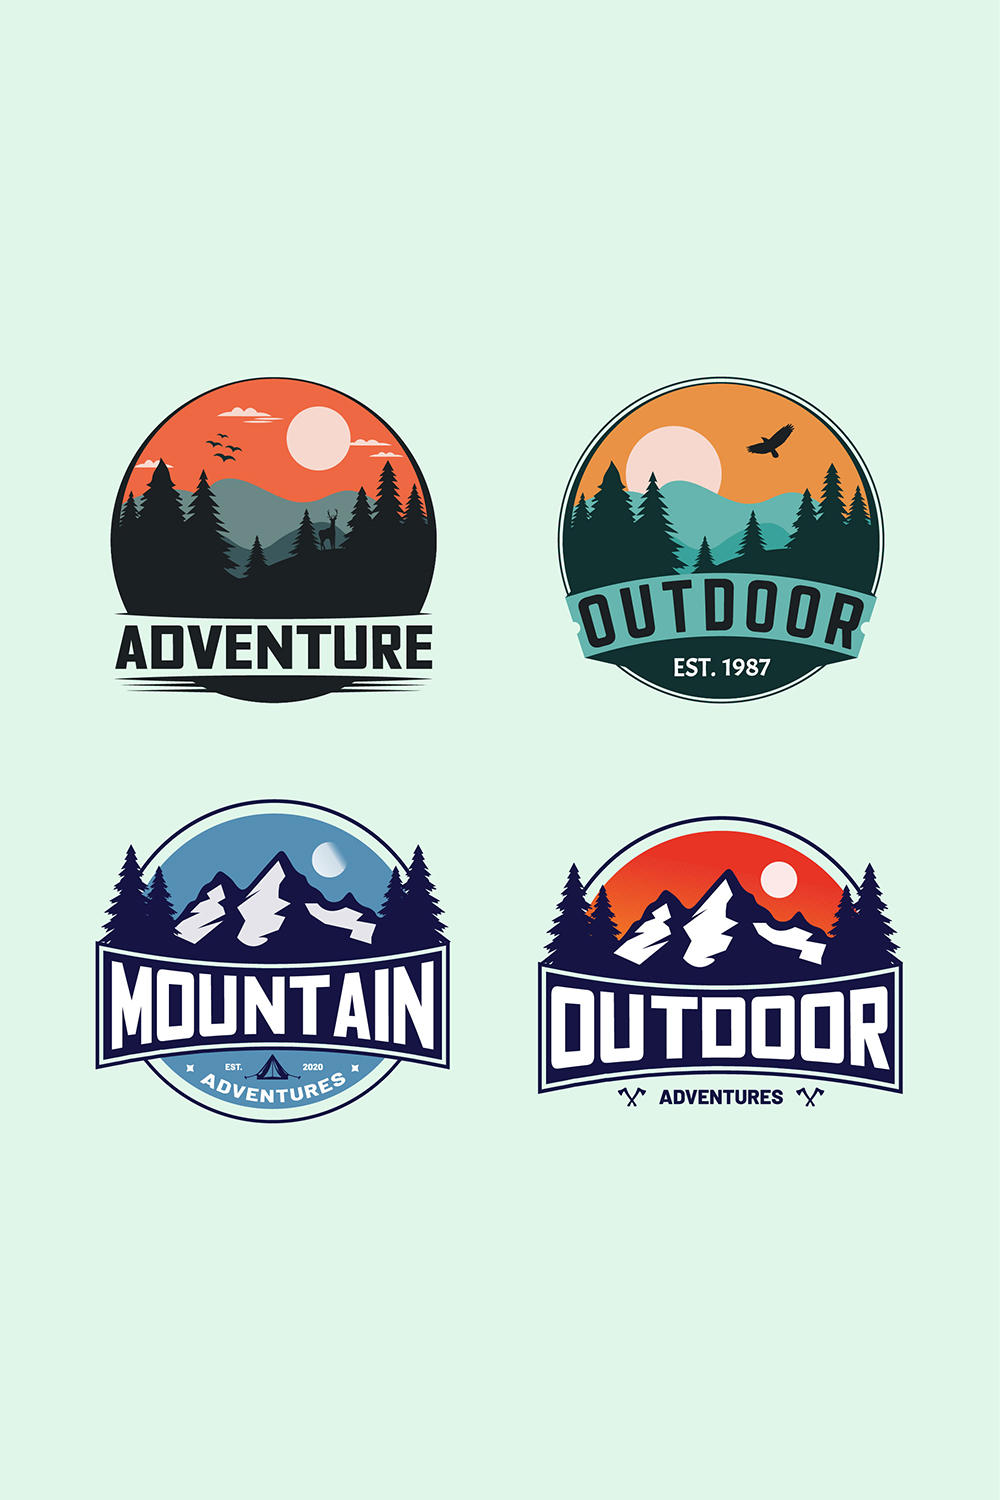 Adventure outdoor mountain logo design vector illustration pinterest preview image.